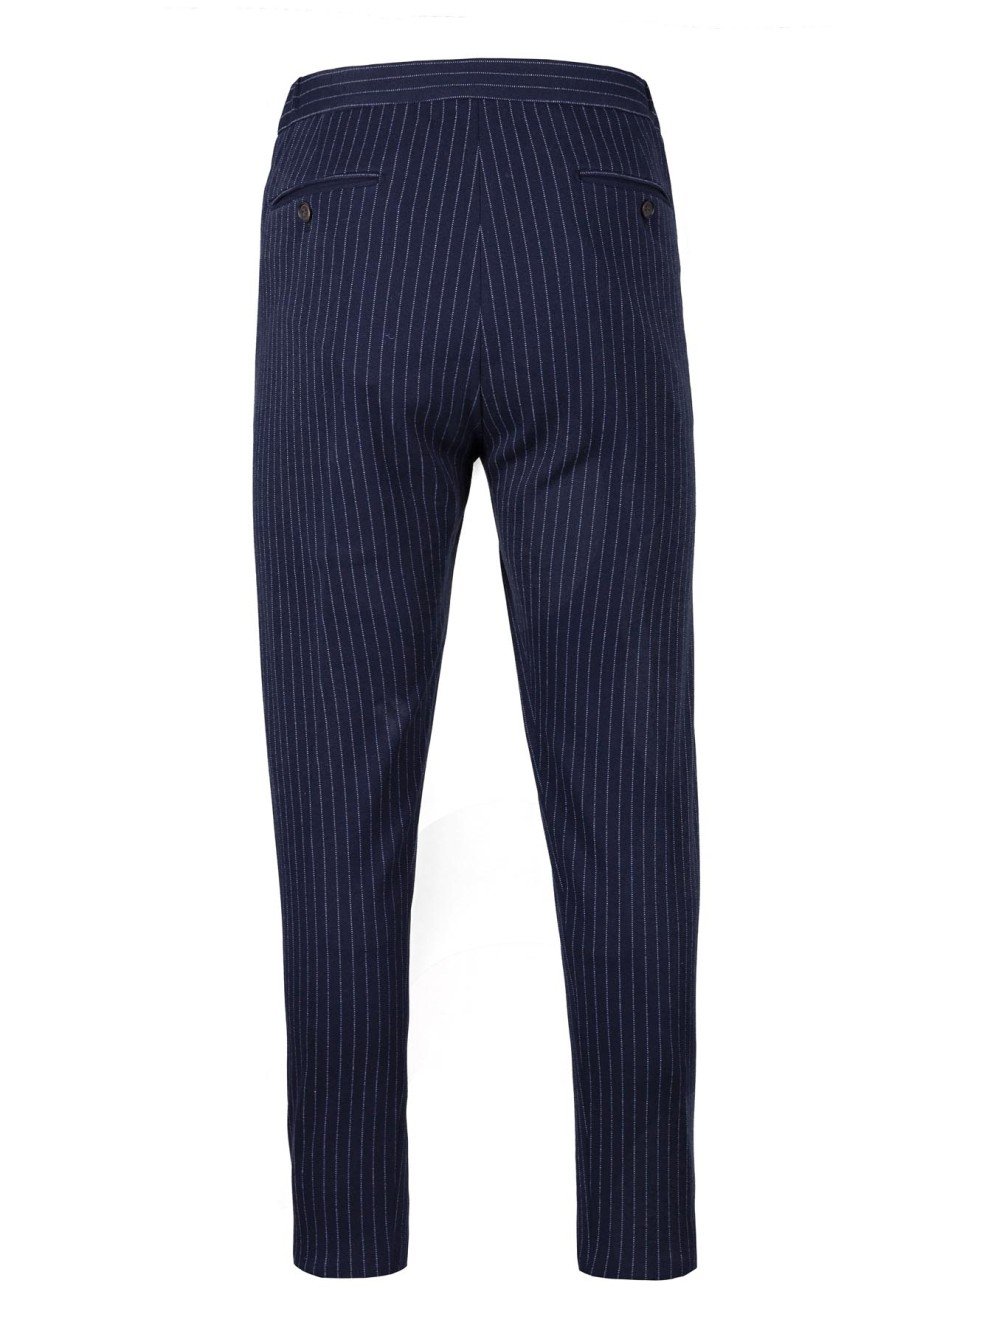 Birk Trouser | Navy Dot Stripe